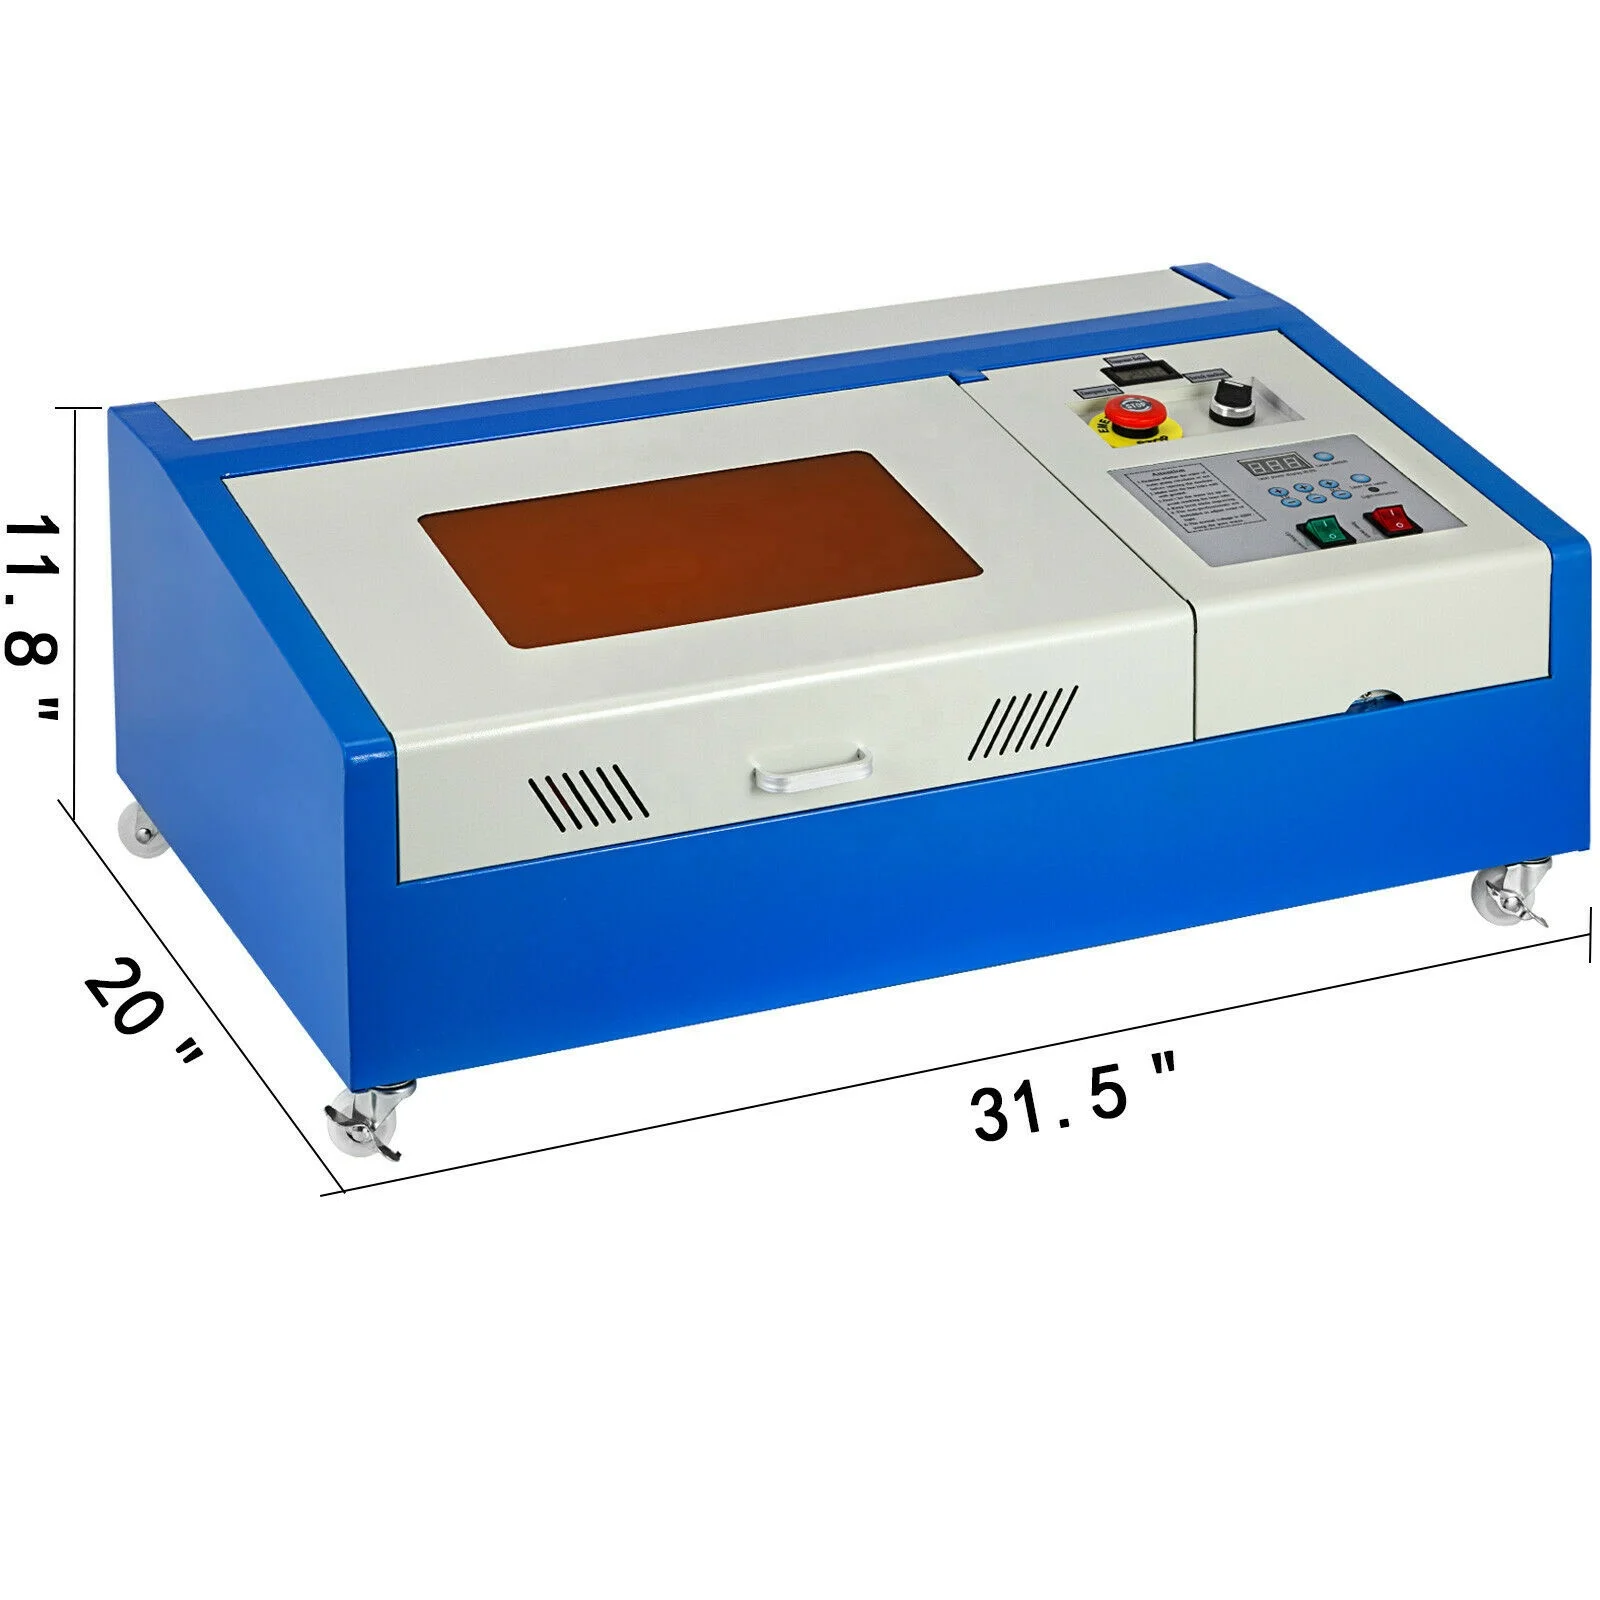 China distributor / dealer mini crafts Laser Engraver making rubber stamp laser engraving machine (60560272615)